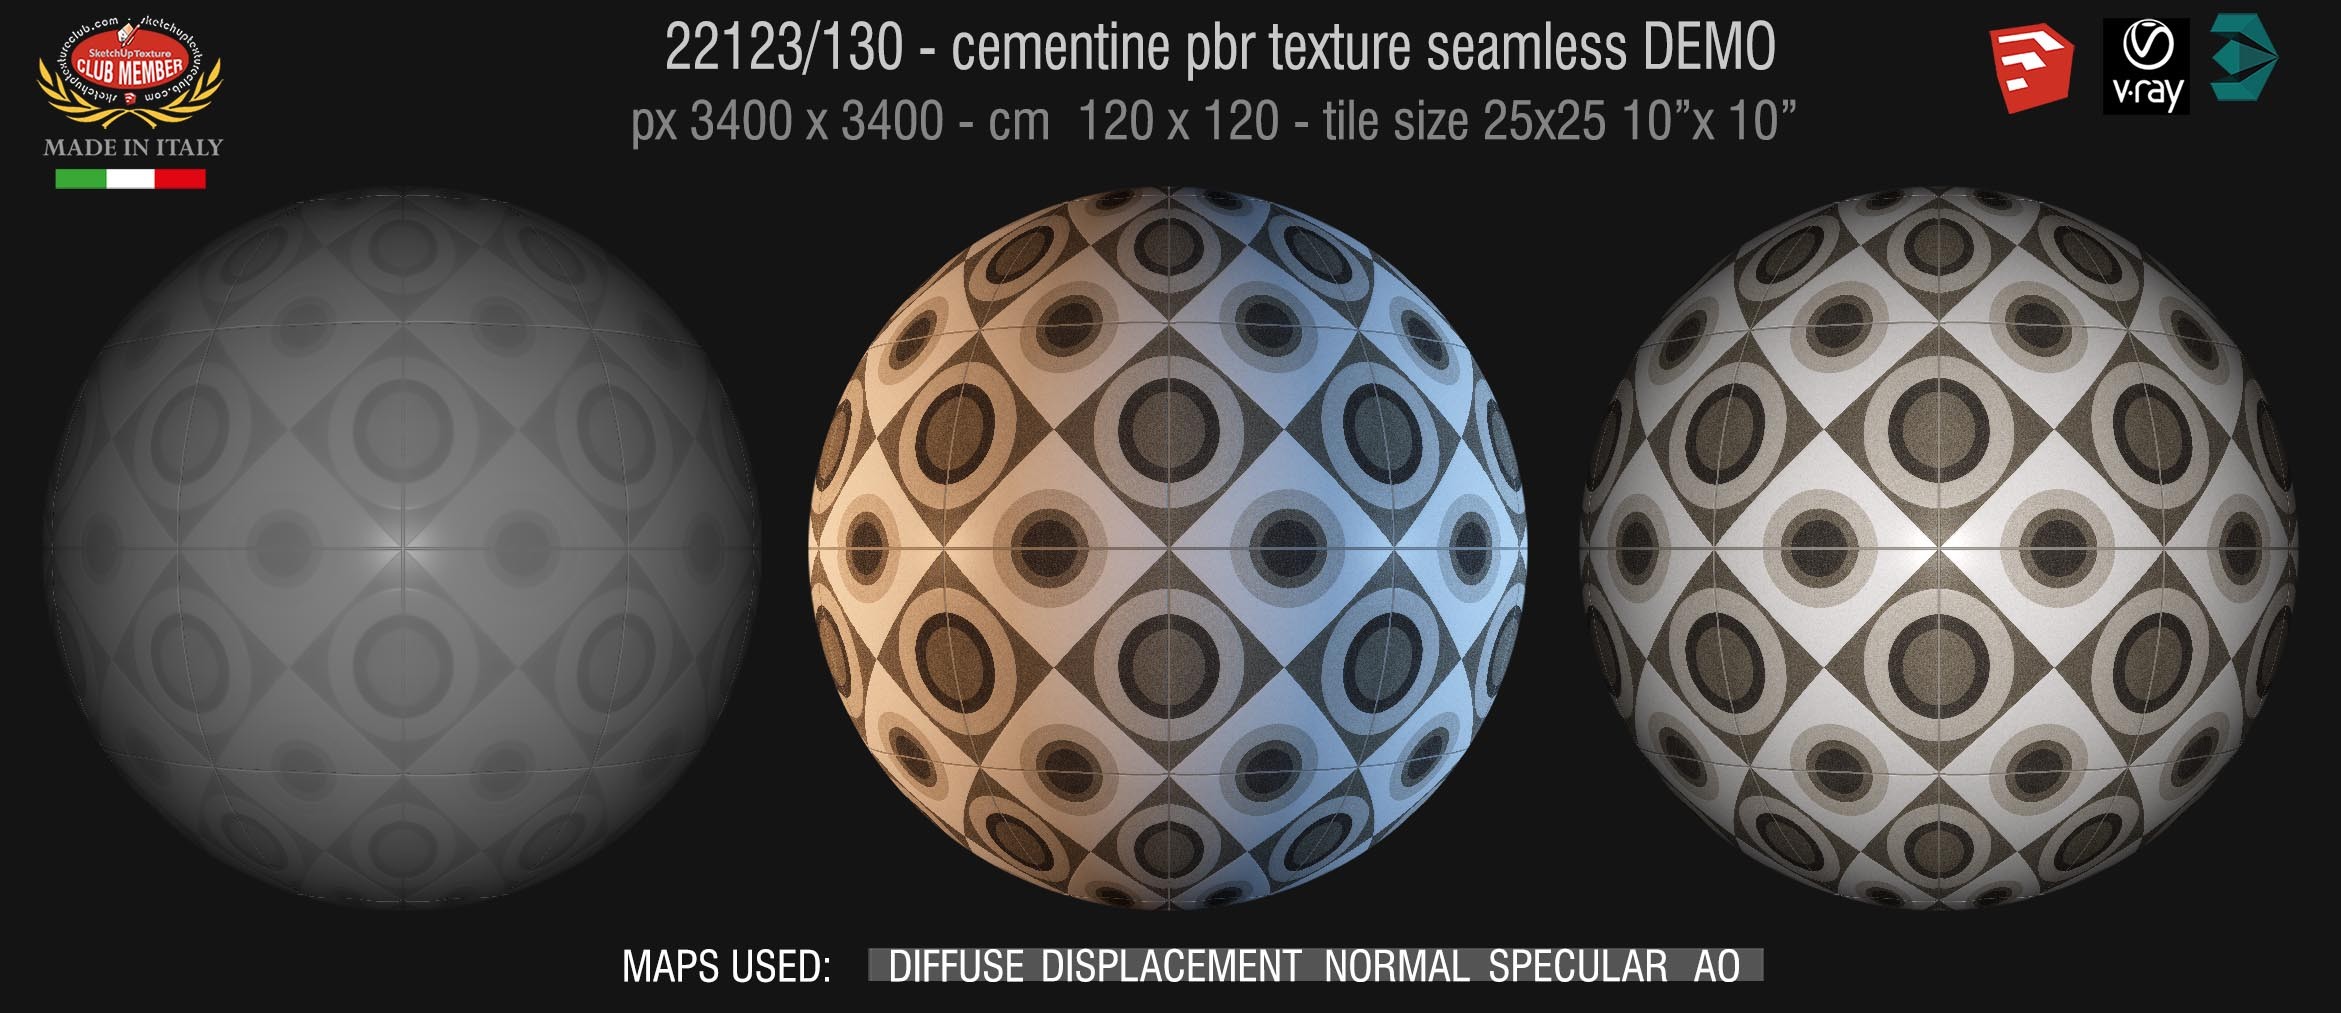 22123/130 cementine tiles Pbr seamless texture DEMO - porcelain stoneware concrete look